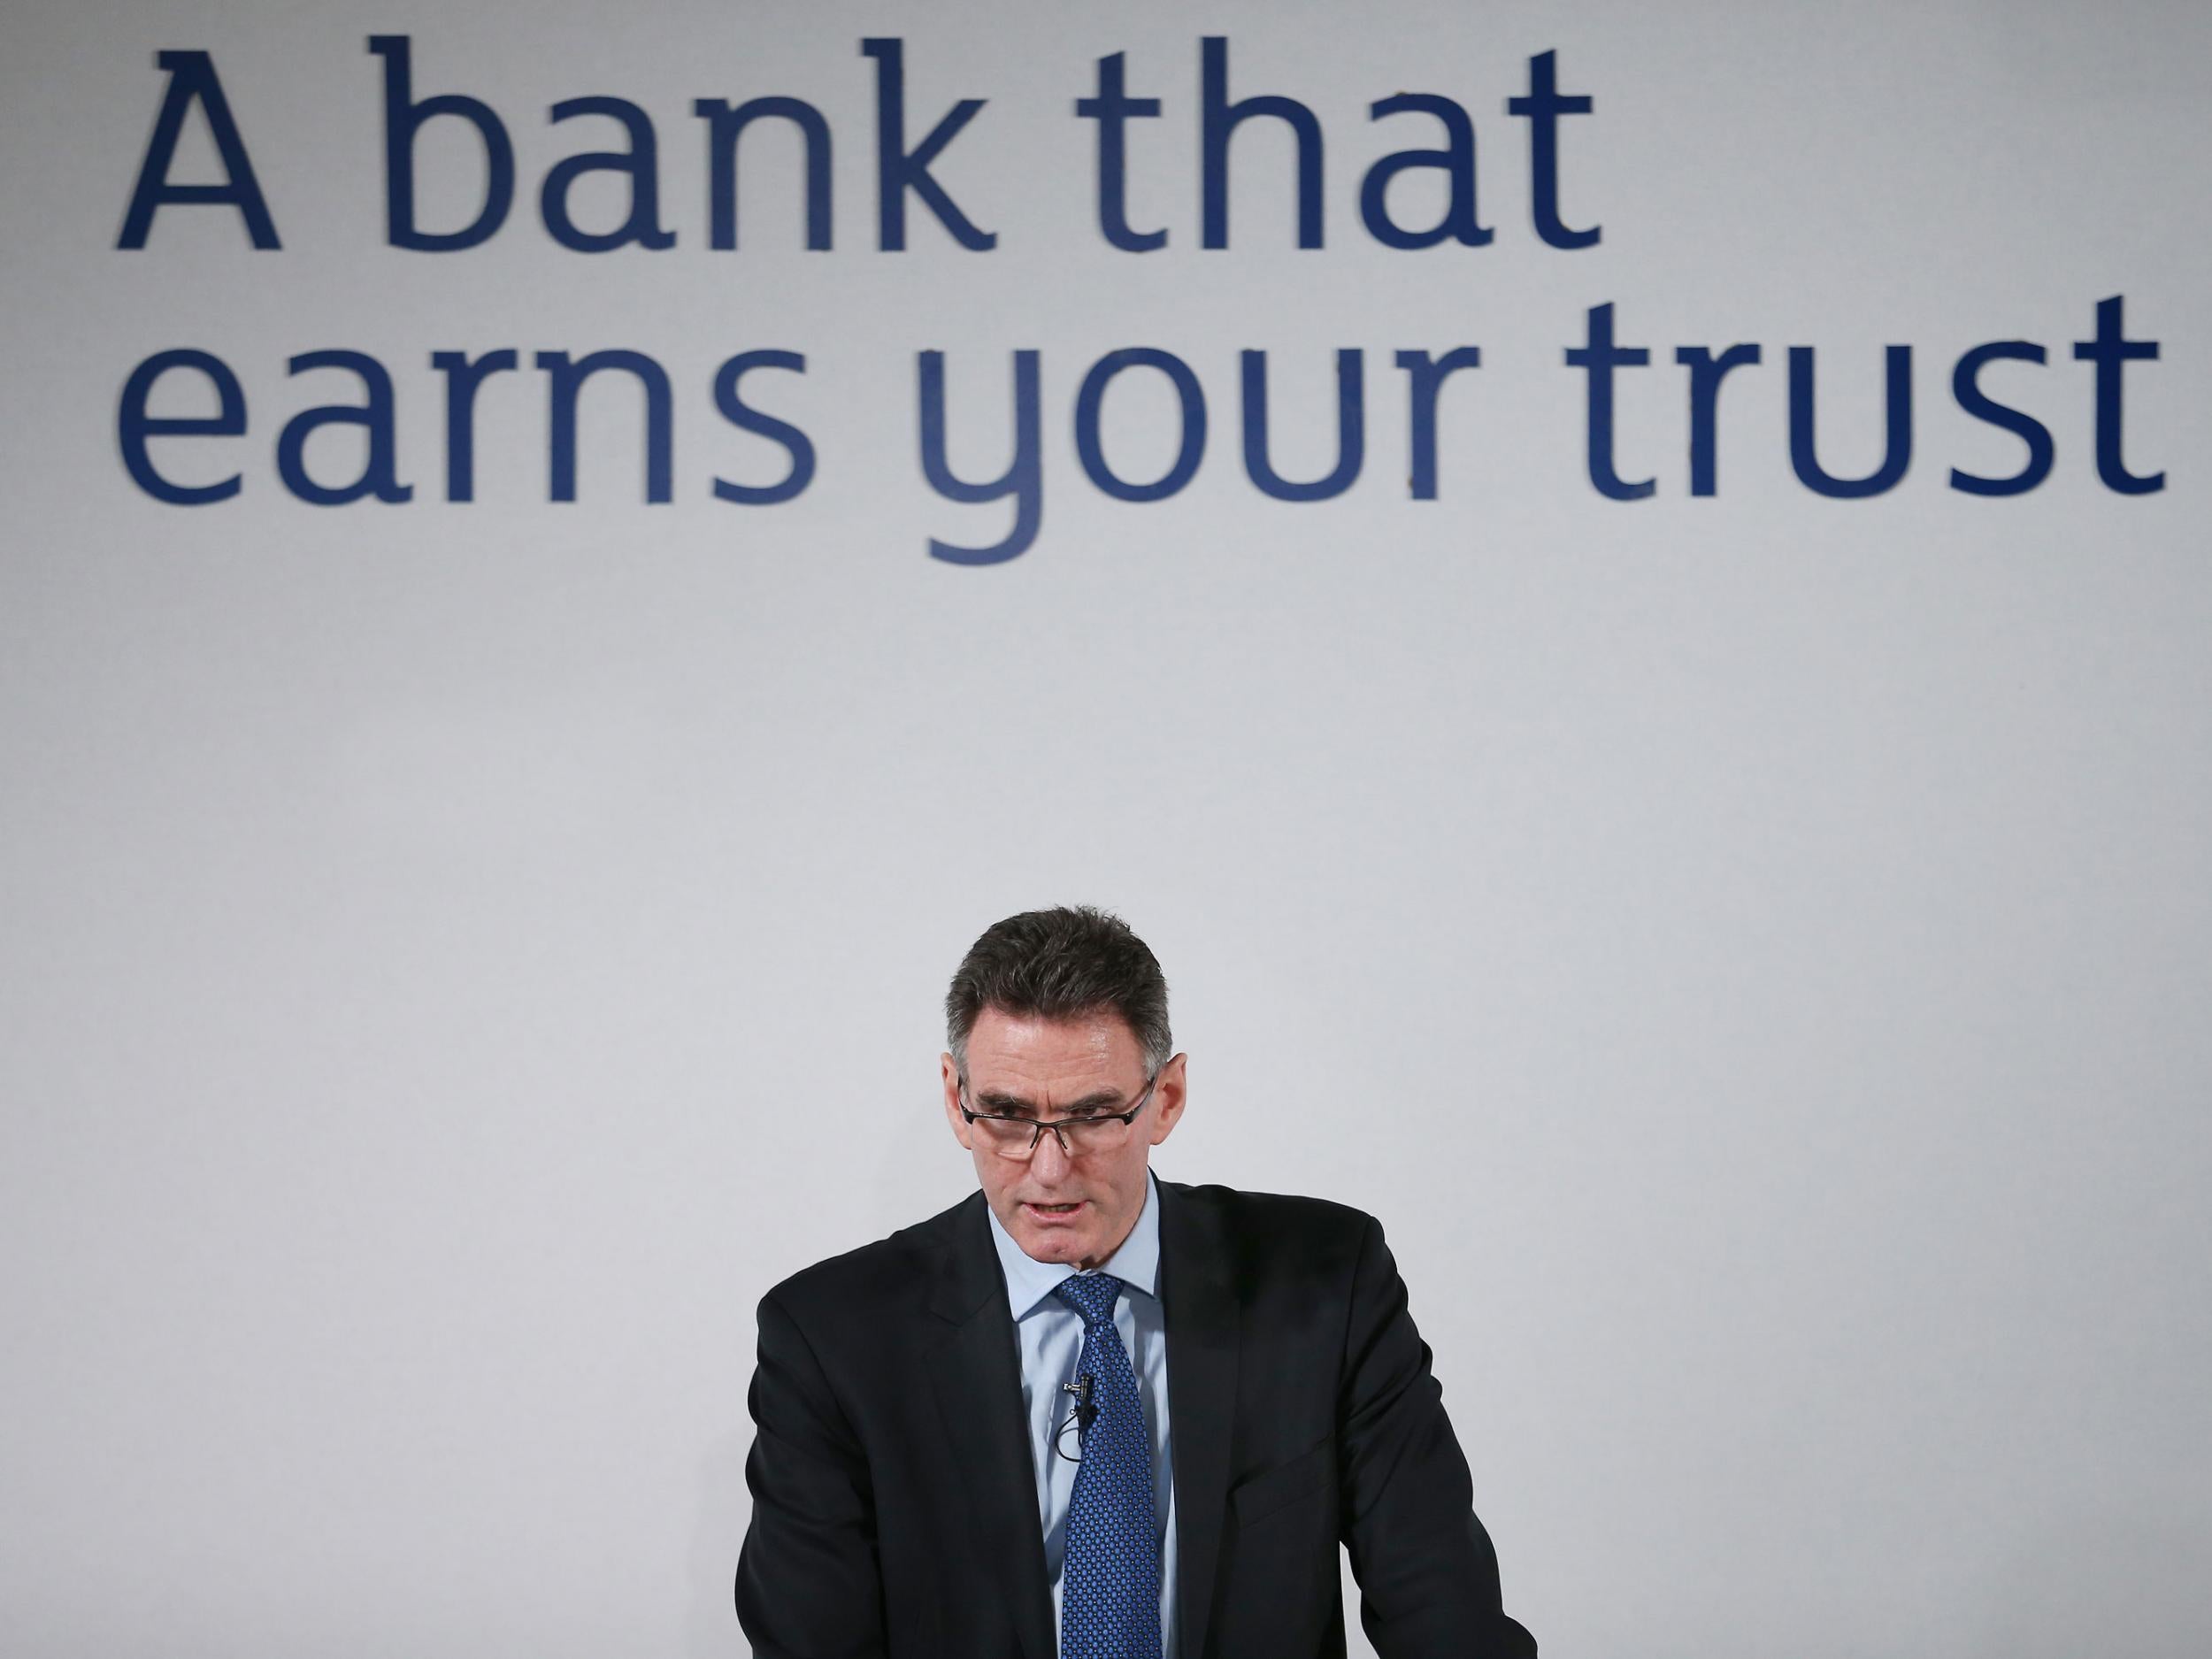 Despite, chief executive Ross McEwan’s reassurances, Royal Bank of Scotland’s latest results are raising concerns